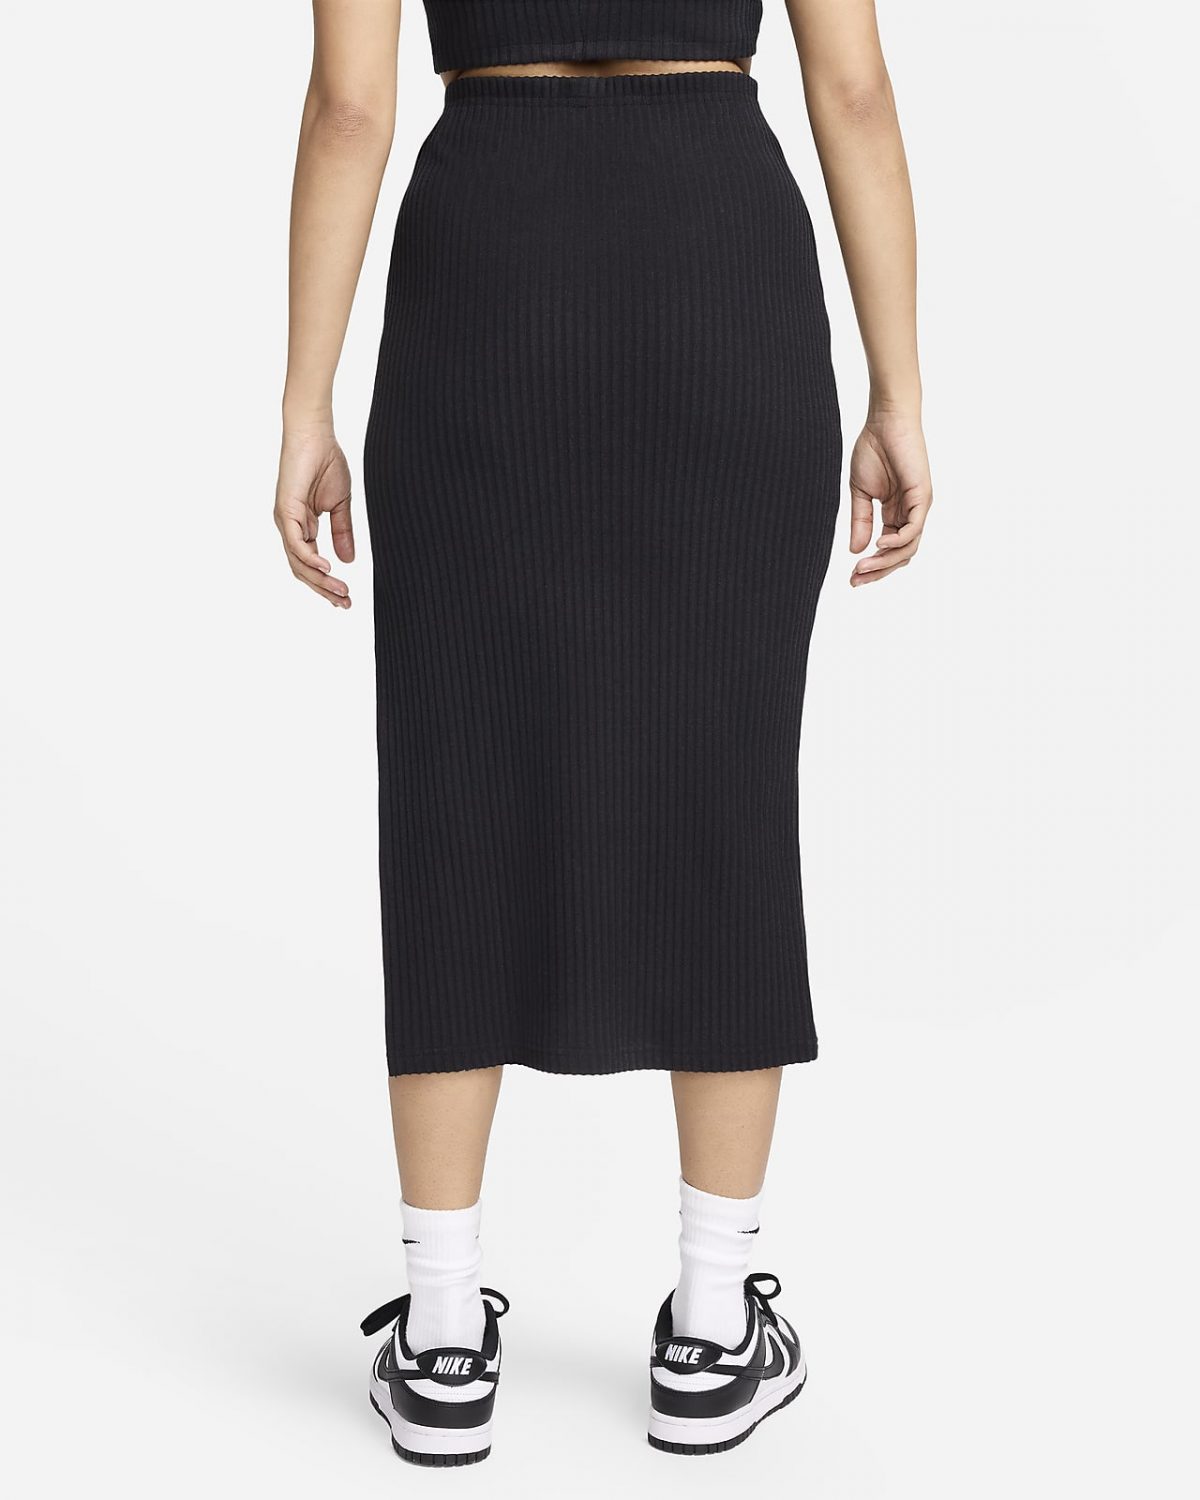 Женская юбка Nike Sportswear Chill Knit черная фотография